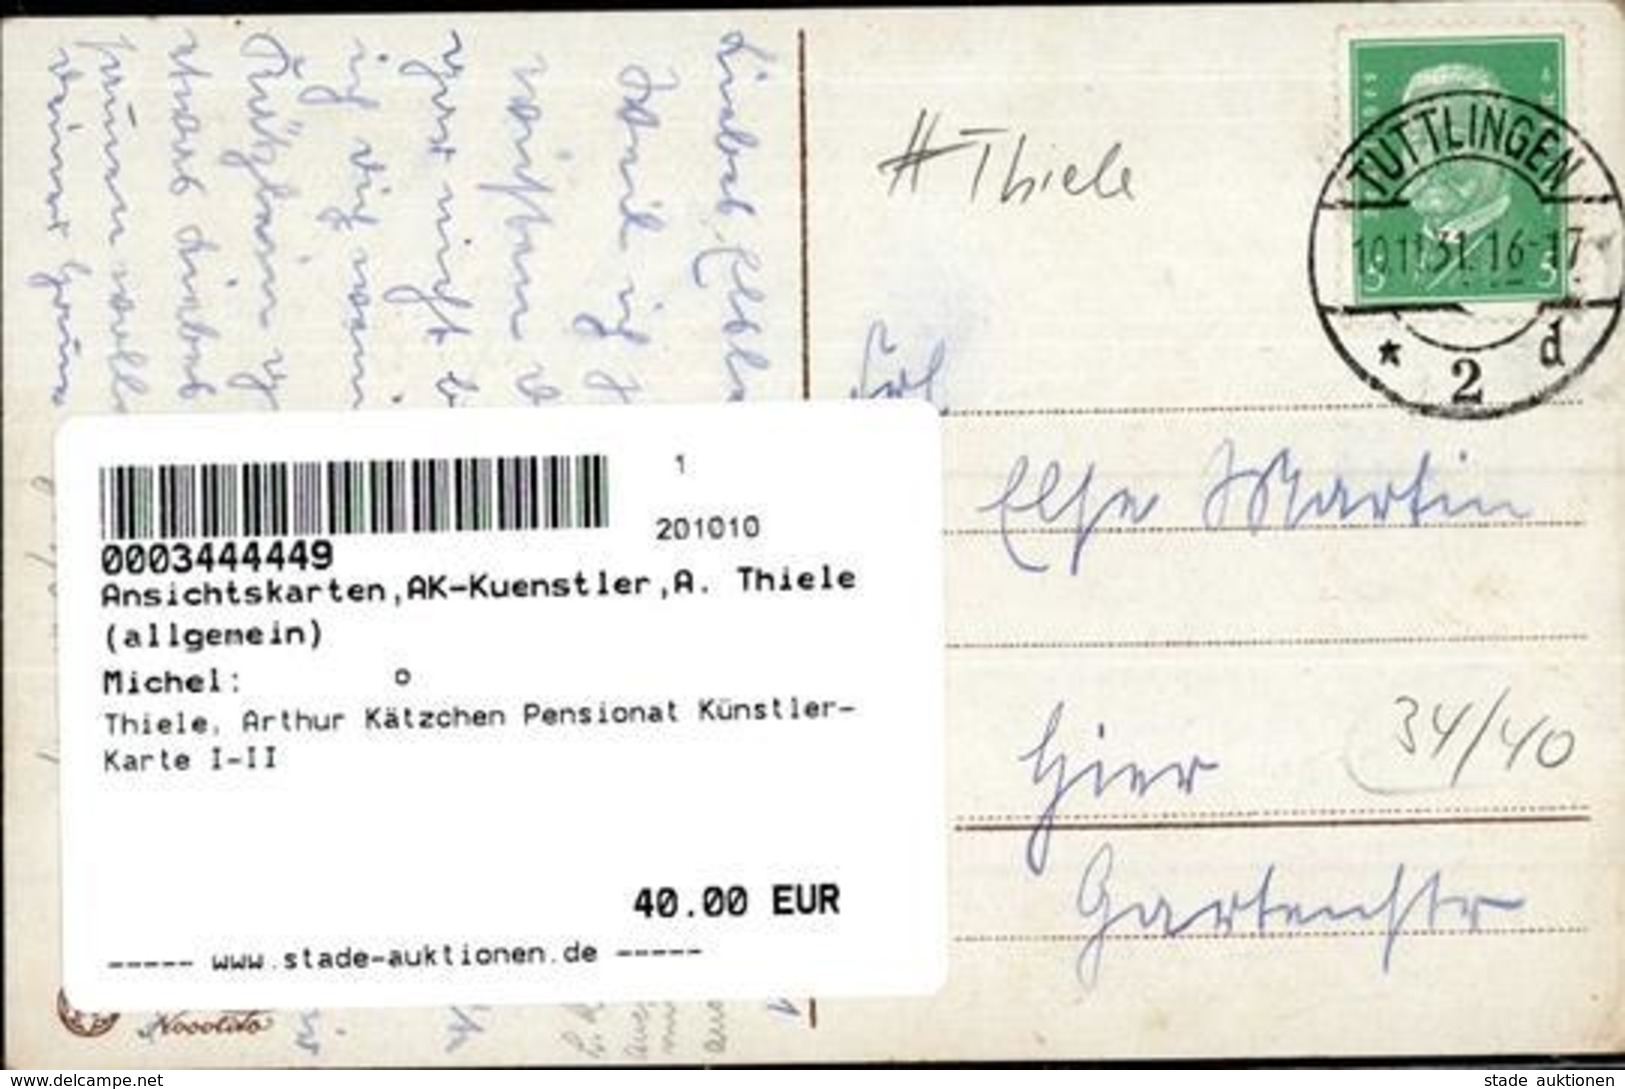 Thiele, Arthur Kätzchen Pensionat Künstler-Karte I-II - Thiele, Arthur